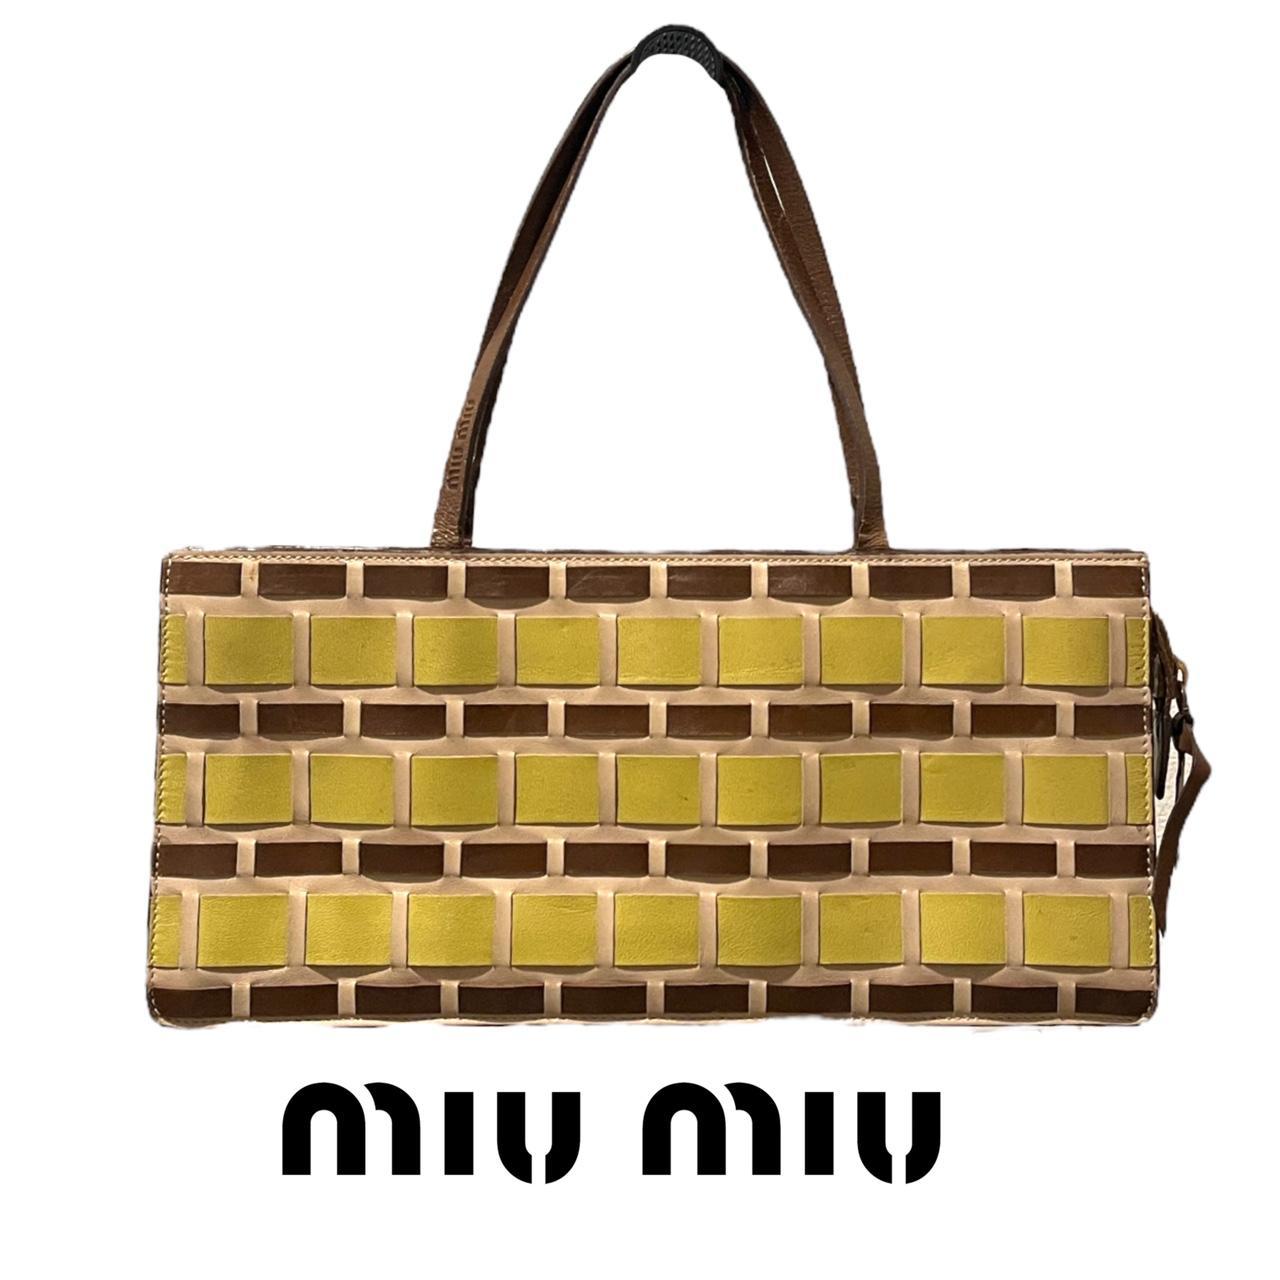 Miu Miu Women's Brown and Yellow Bag